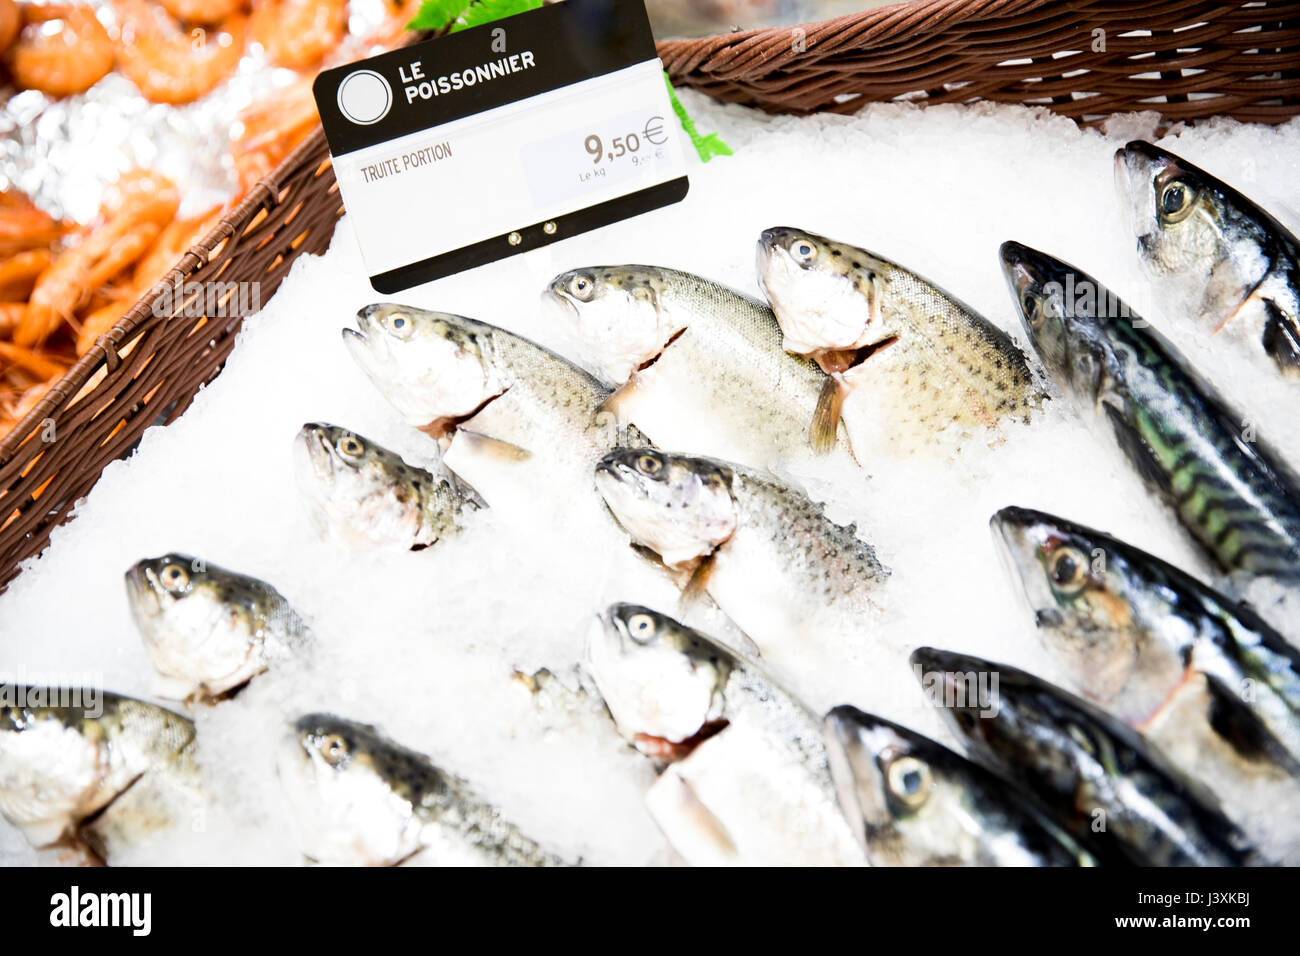 Fresh fish display in supermarket, close-up Stock Photo